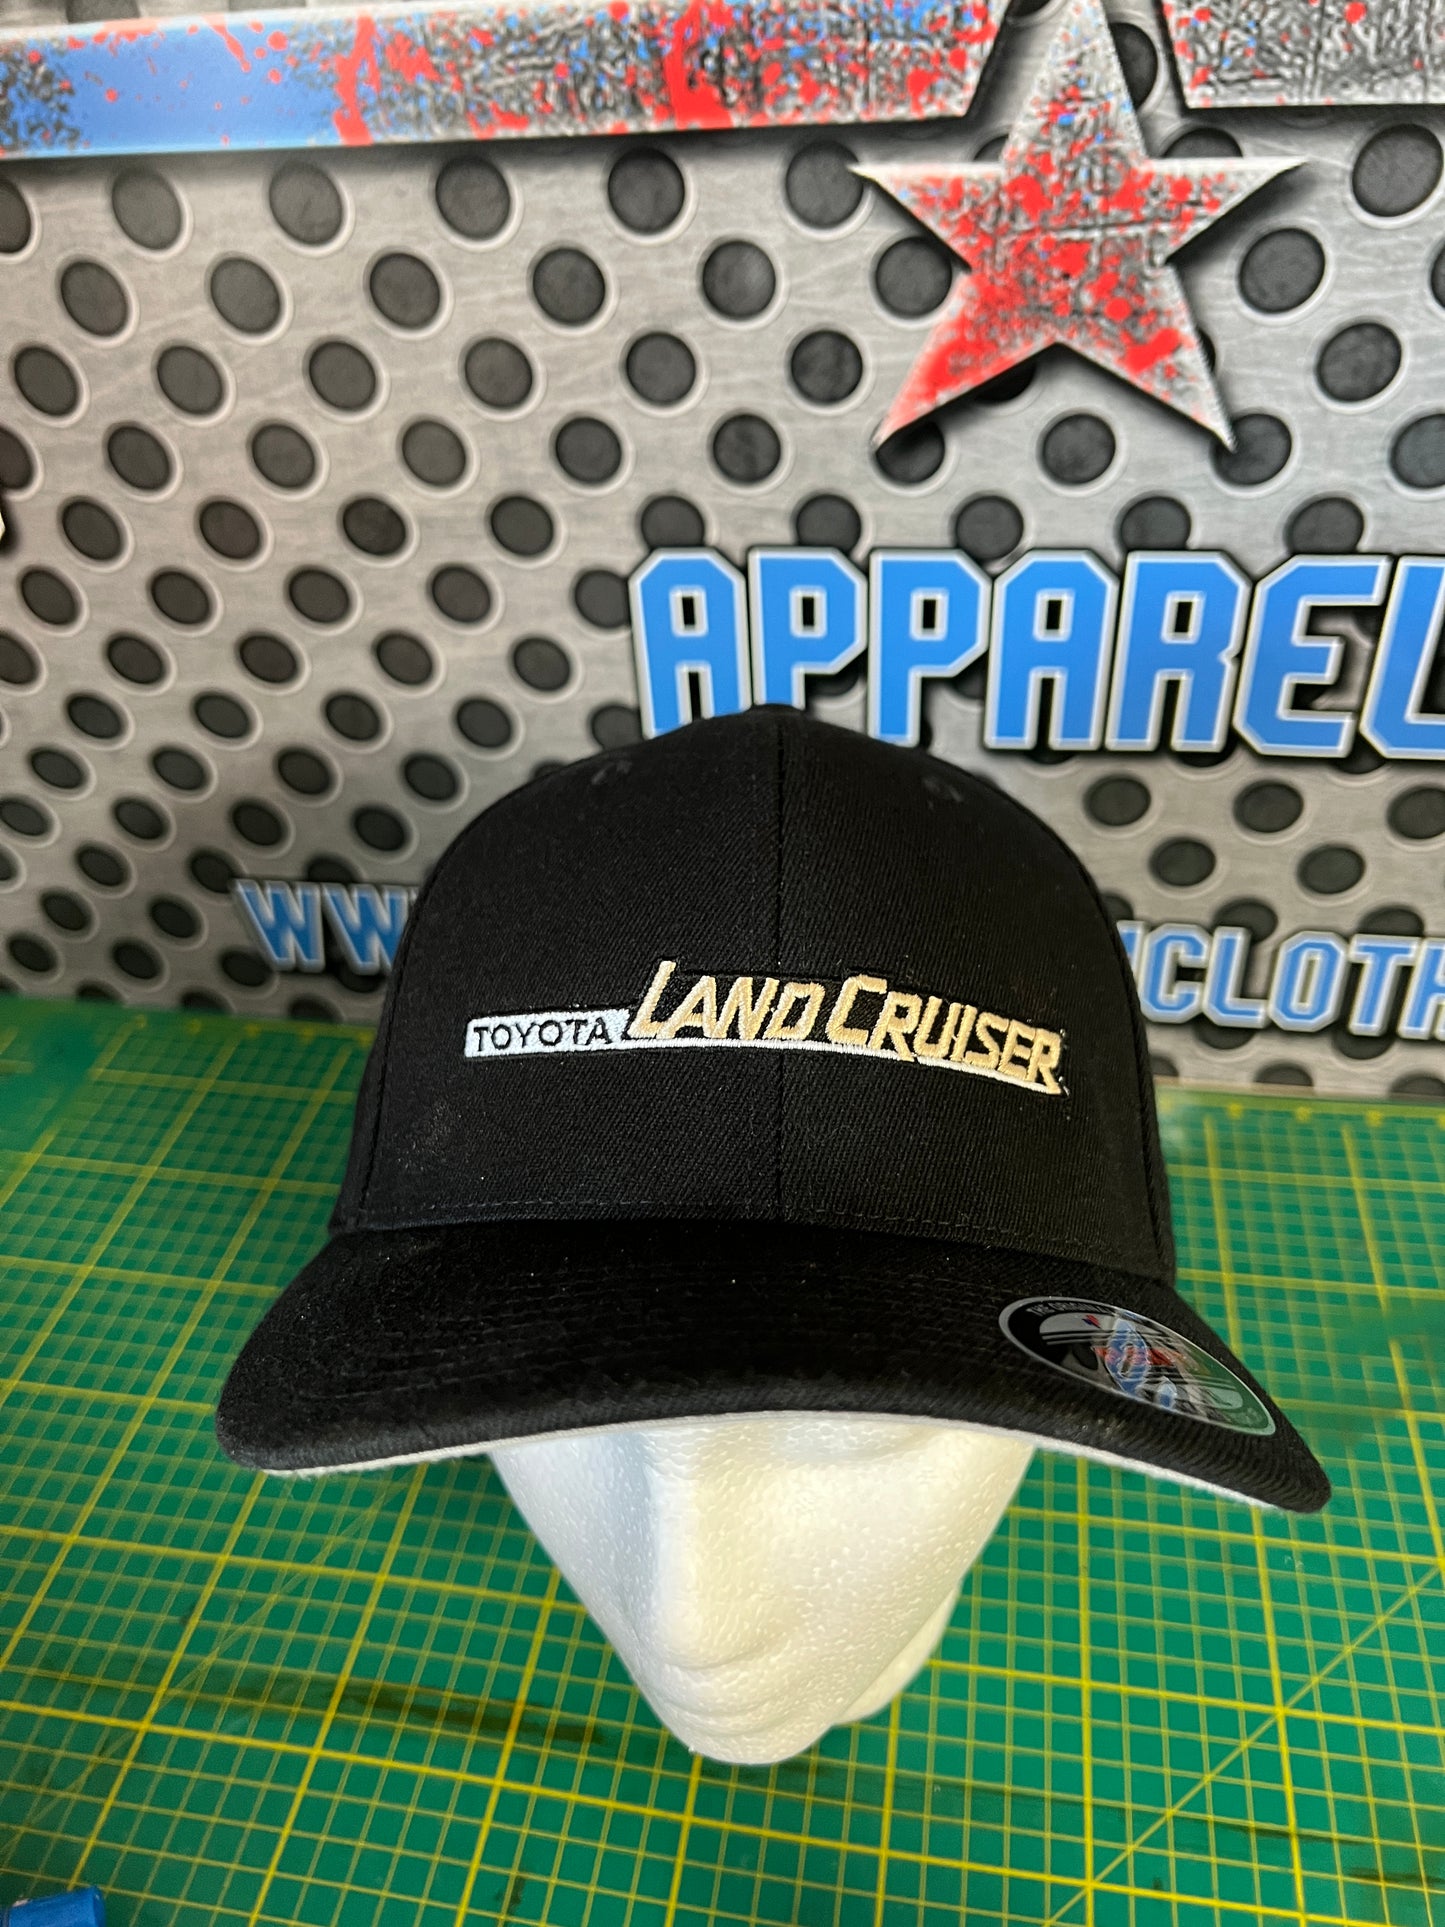 Toyota Land Cruiser Patch Hat